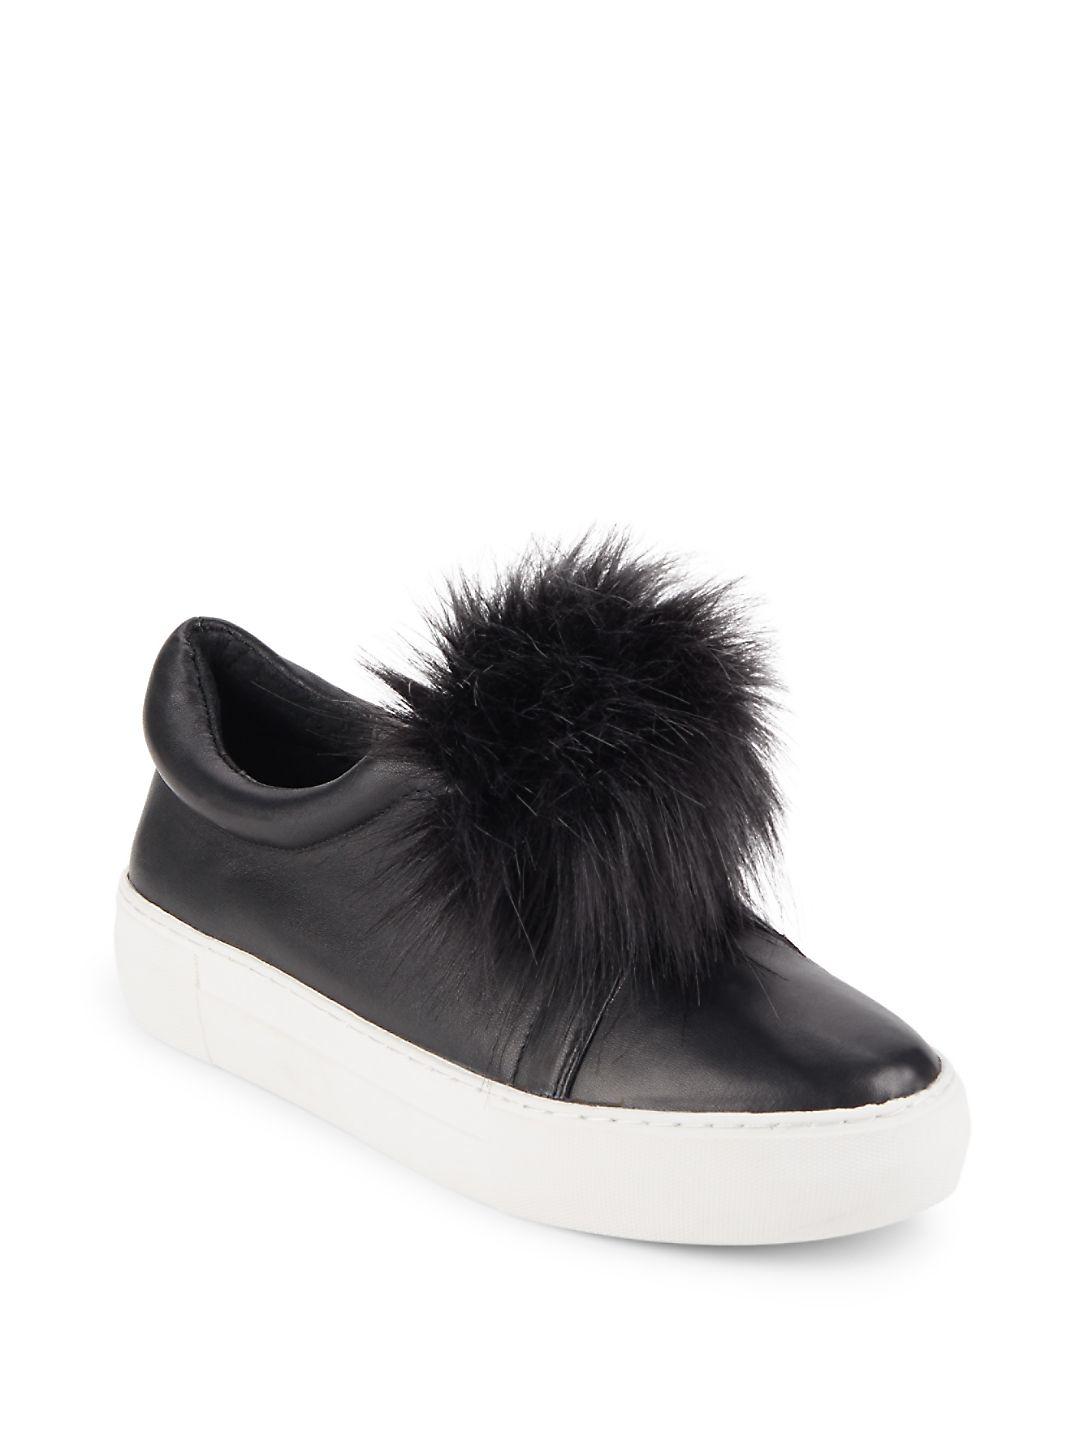 J/Slides Leather & Faux Fur Pom-pom Sneakers in Black - Lyst